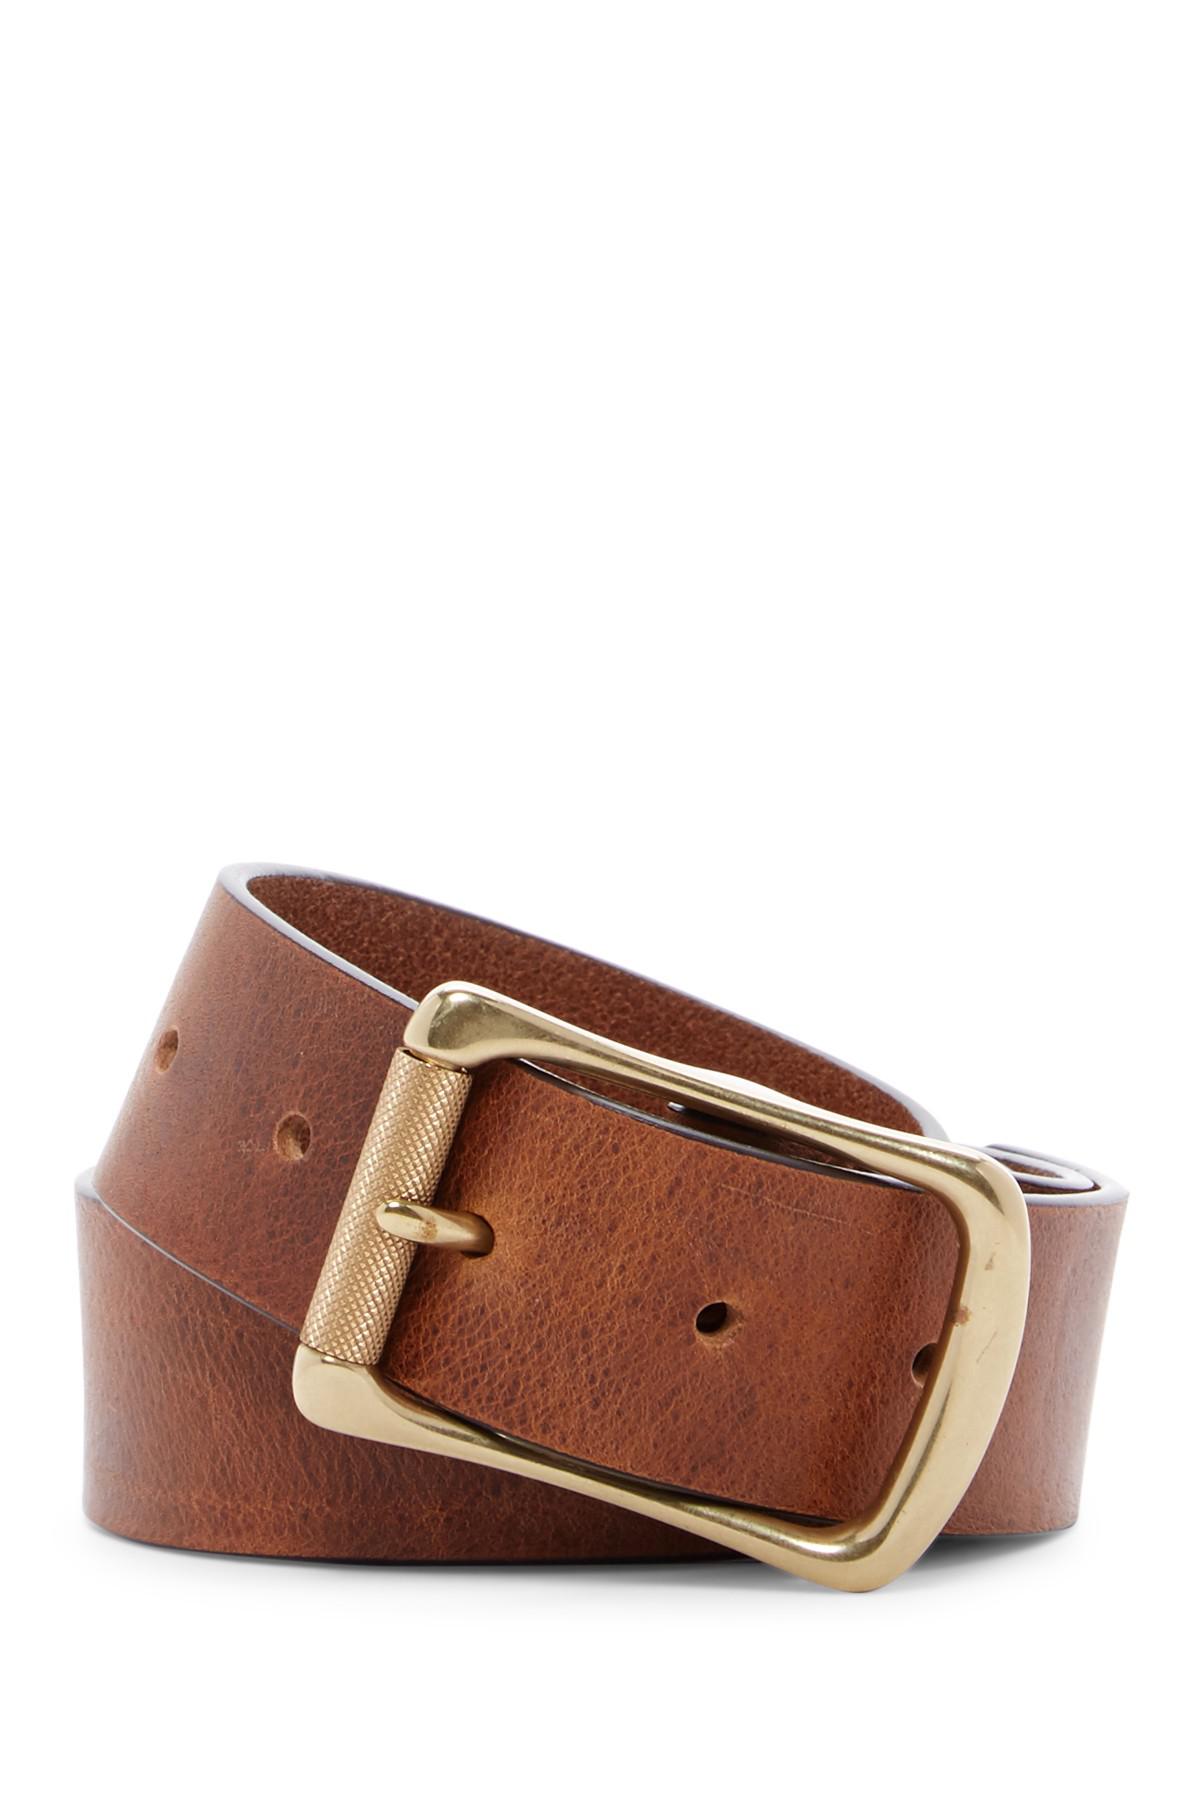 Lyst - Frye Engineer Leather Belt in Brown for Men